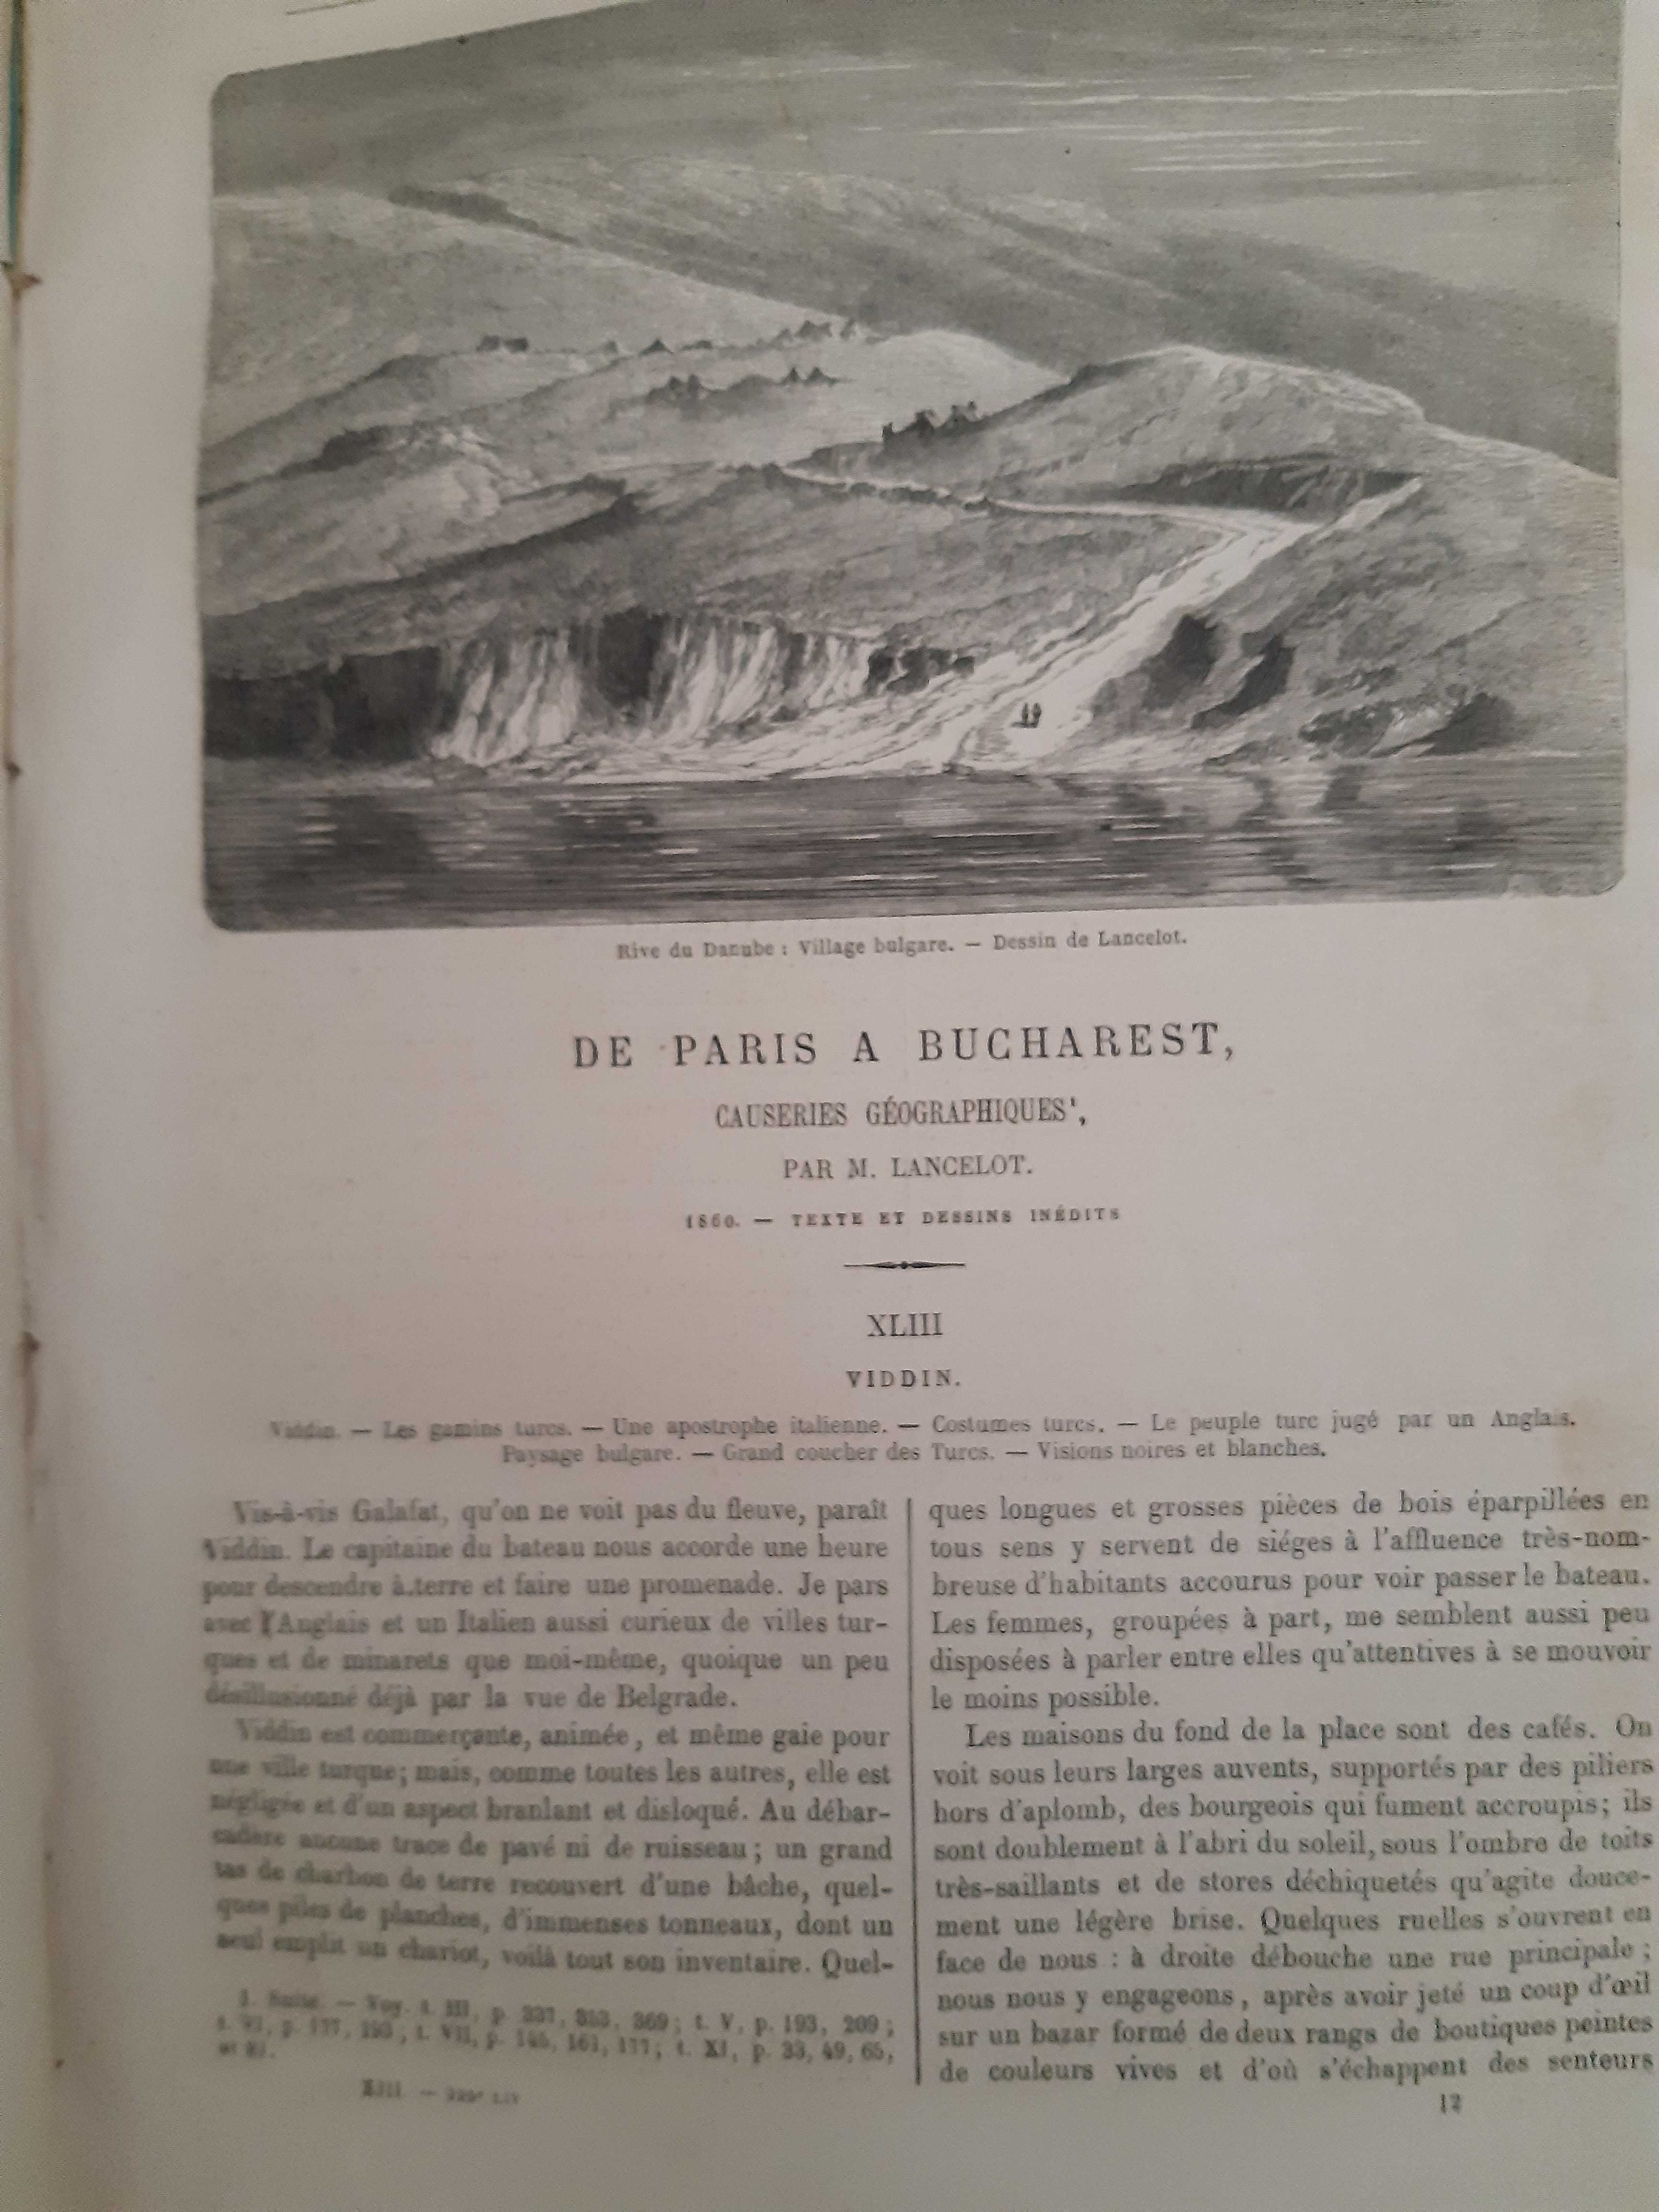 Le Tour du Monde 1866 primul semestru